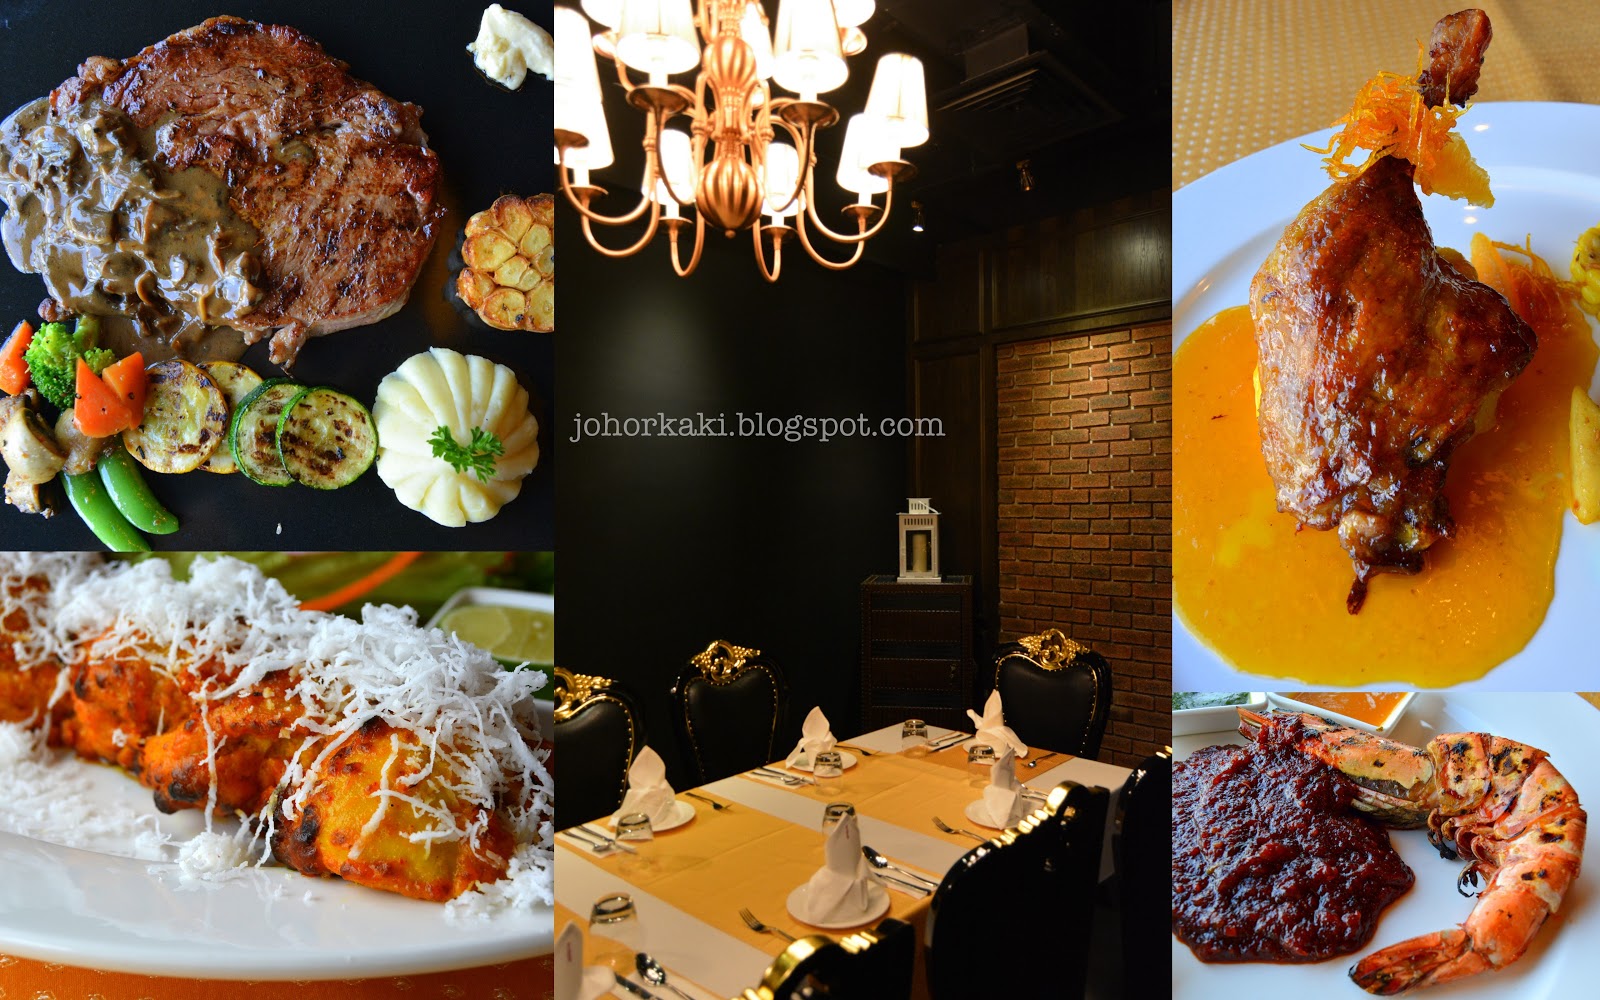 Grill Puteri Johor Bahru JB JK1157 |Tony Johor Kaki Travels for Food · Heritage · Culture · History